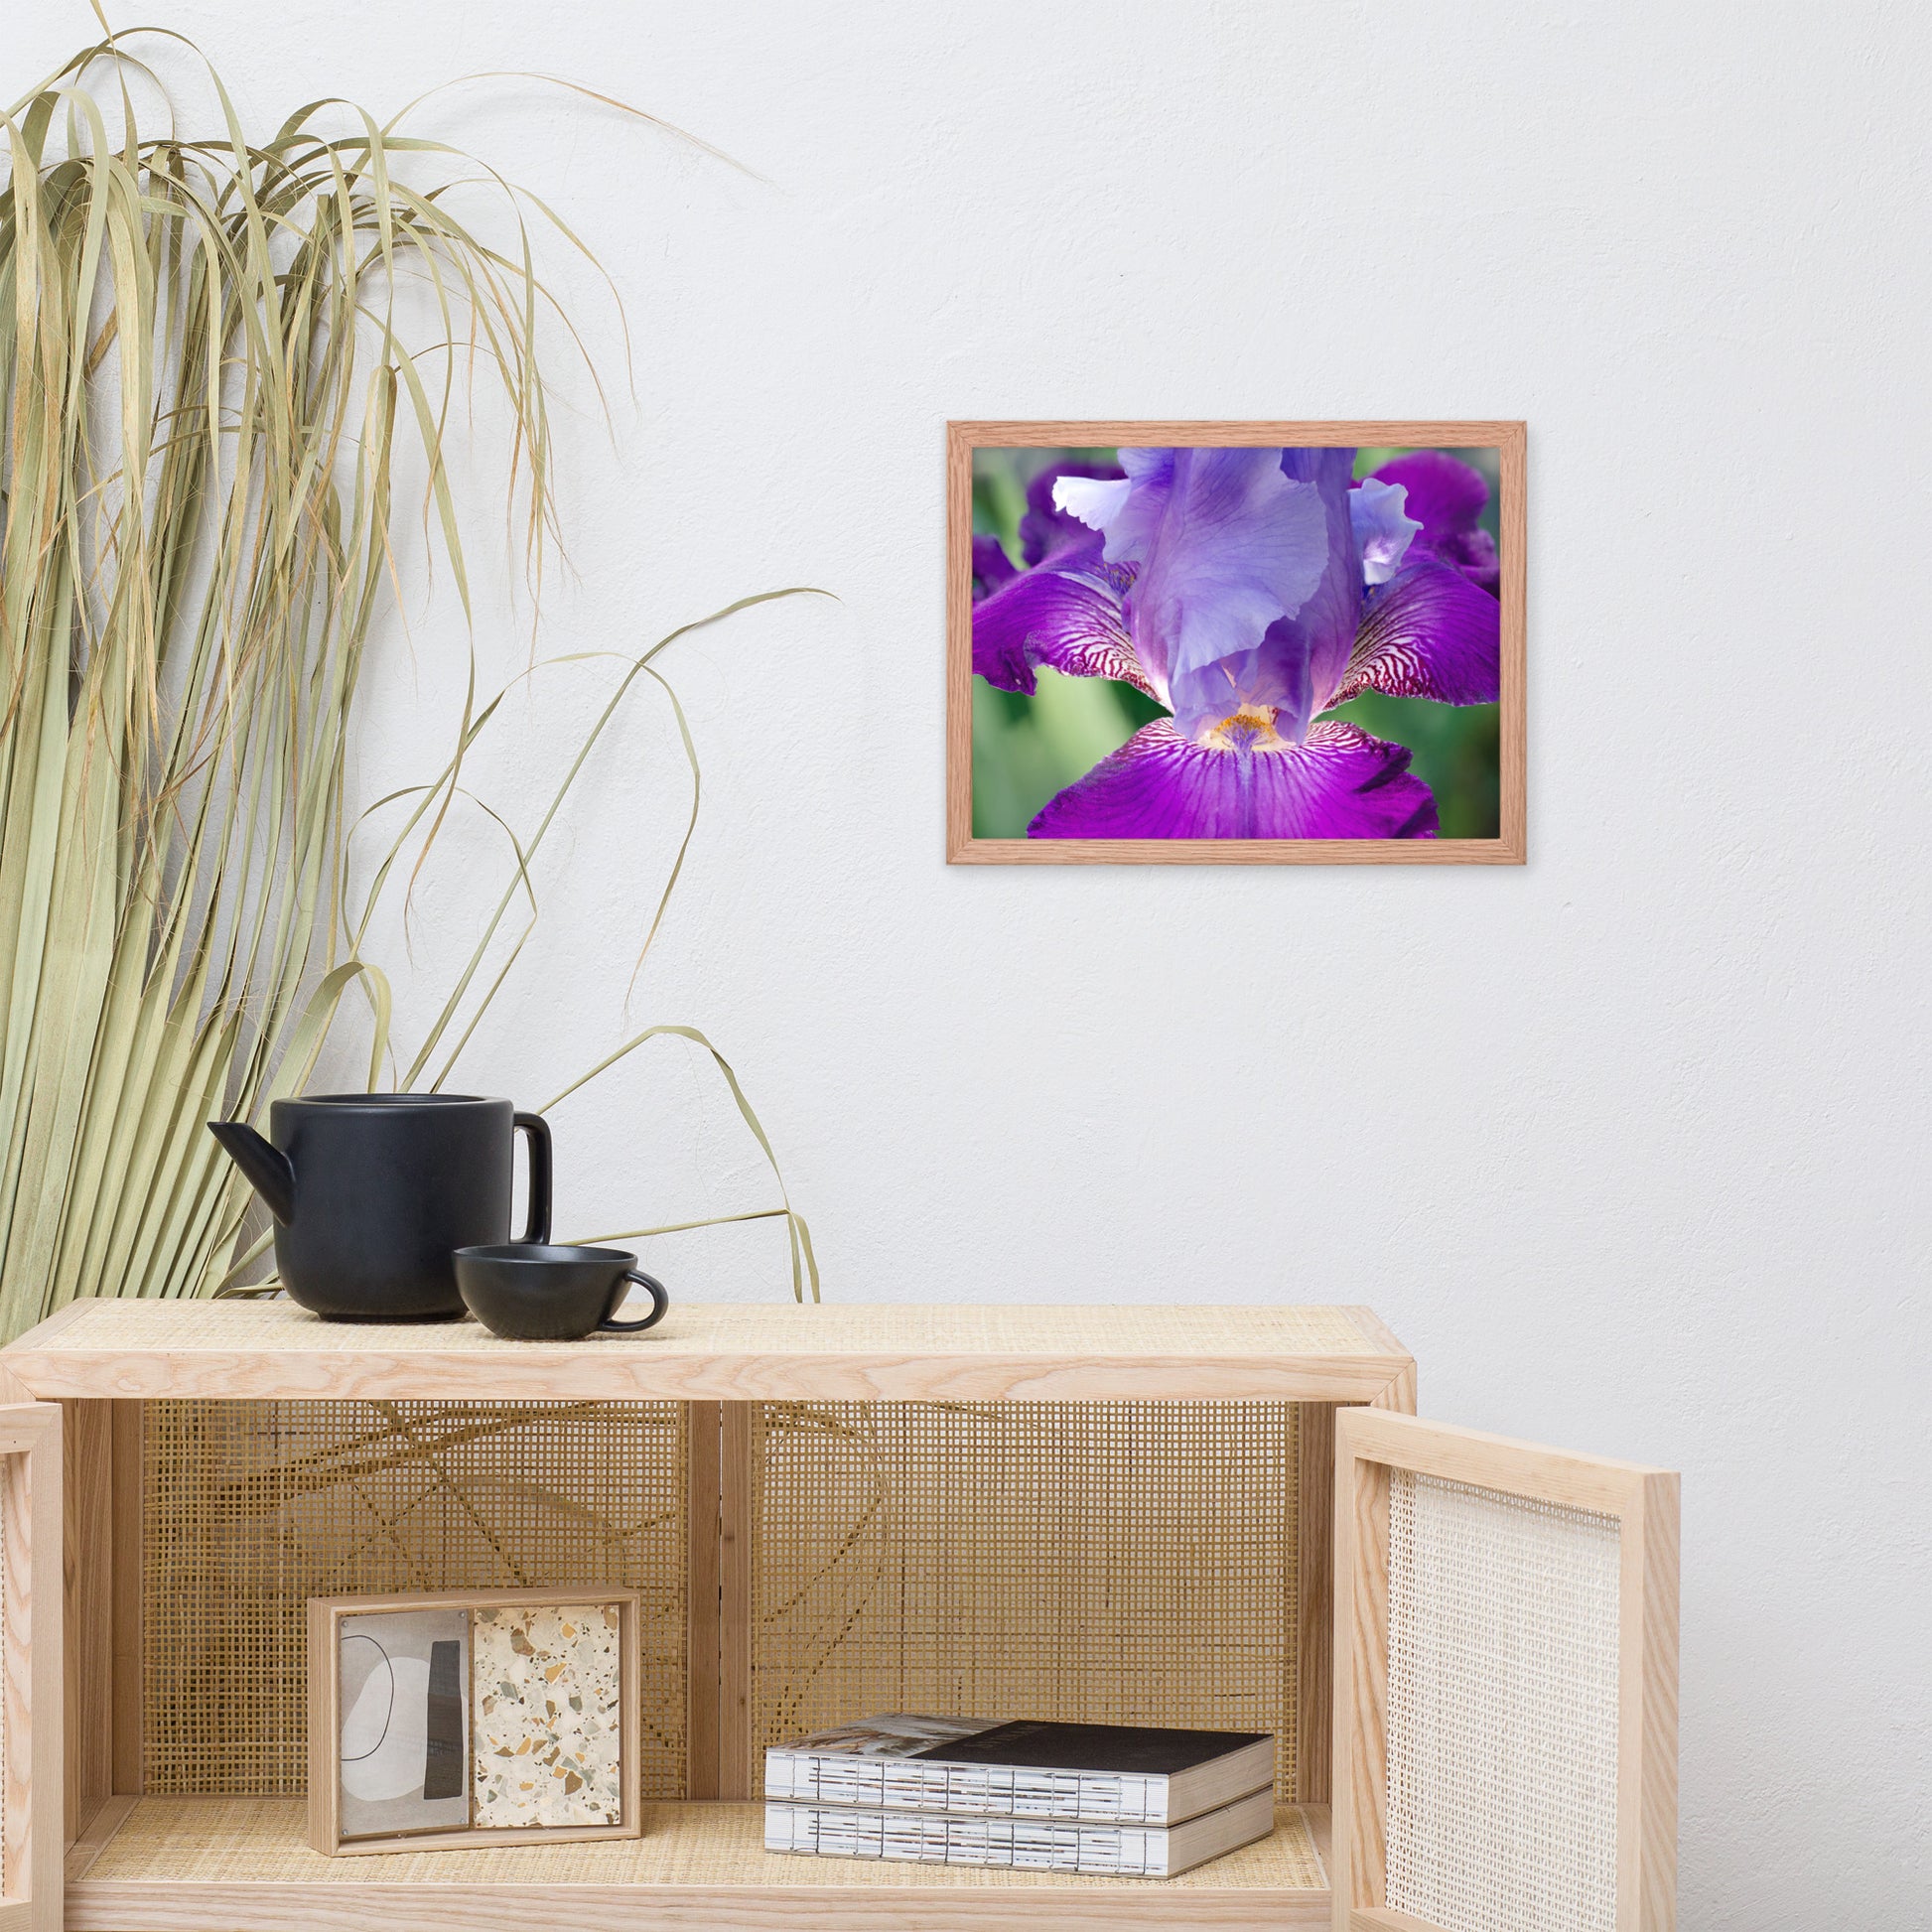 Bedroom Wall Art Etsy: Glowing Iris - Floral / Botanical / Nature Photo Framed Wall Art Print - Artwork - Wall Decor - Modern Home Decor